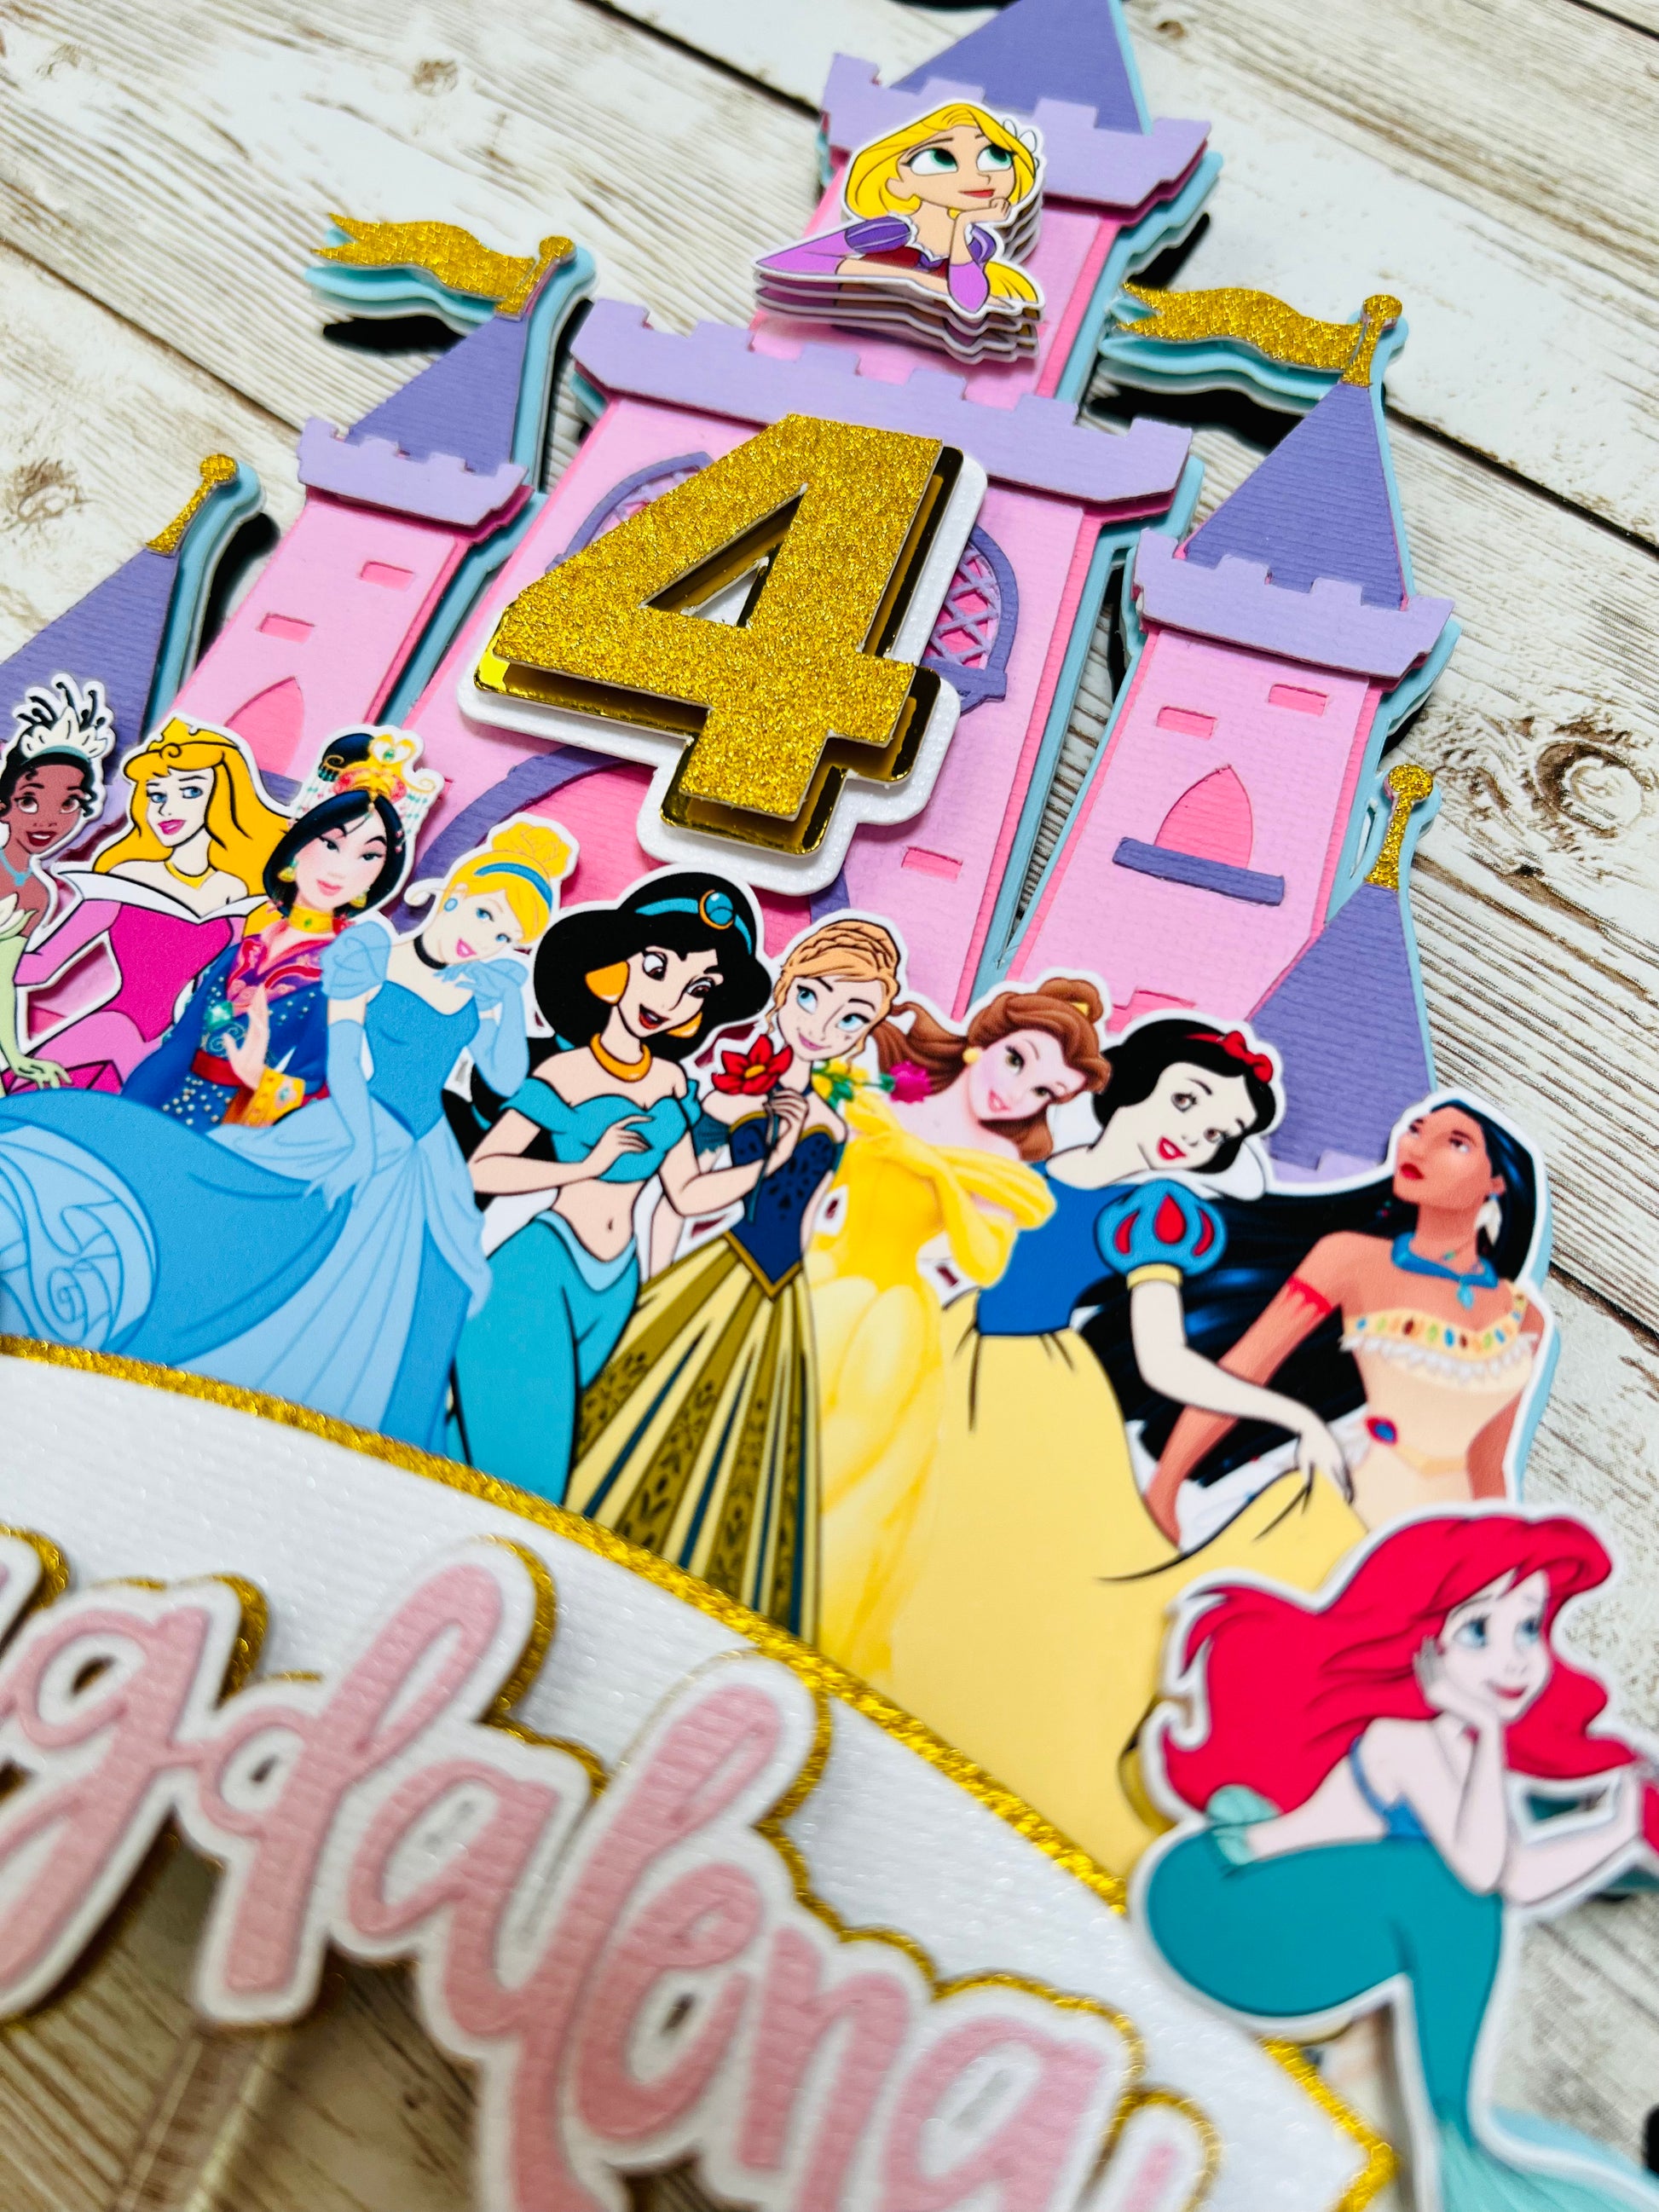  Happy Birthday Princess Cake Topper for Princess